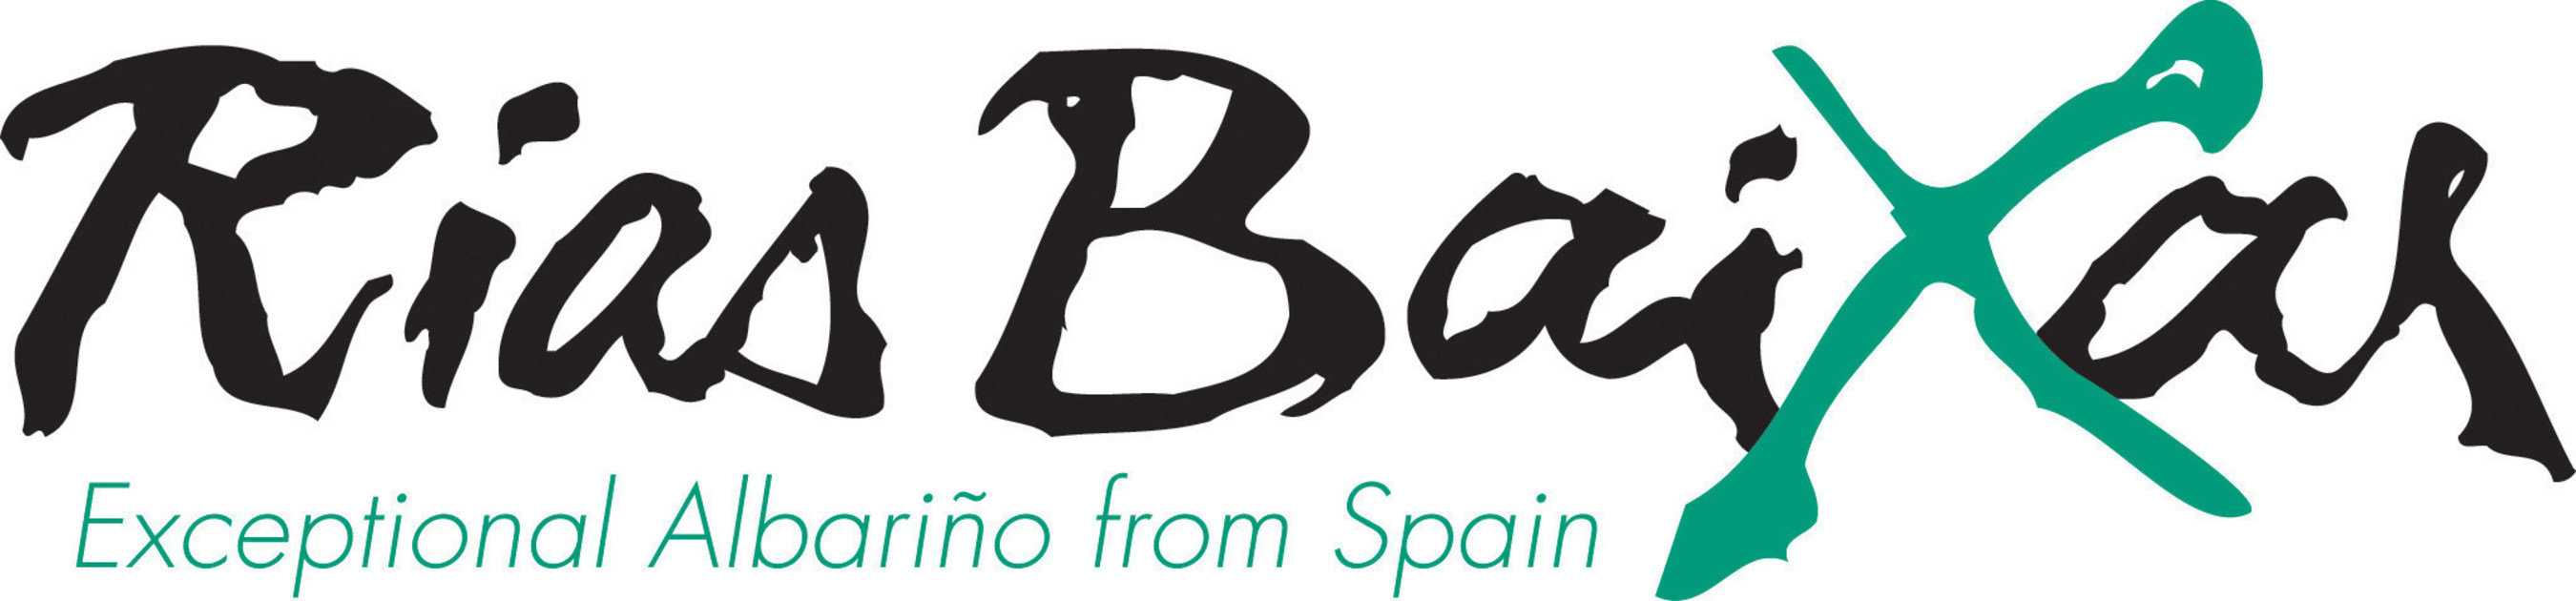 Rias Baixas: Exceptional Albarino from Spain